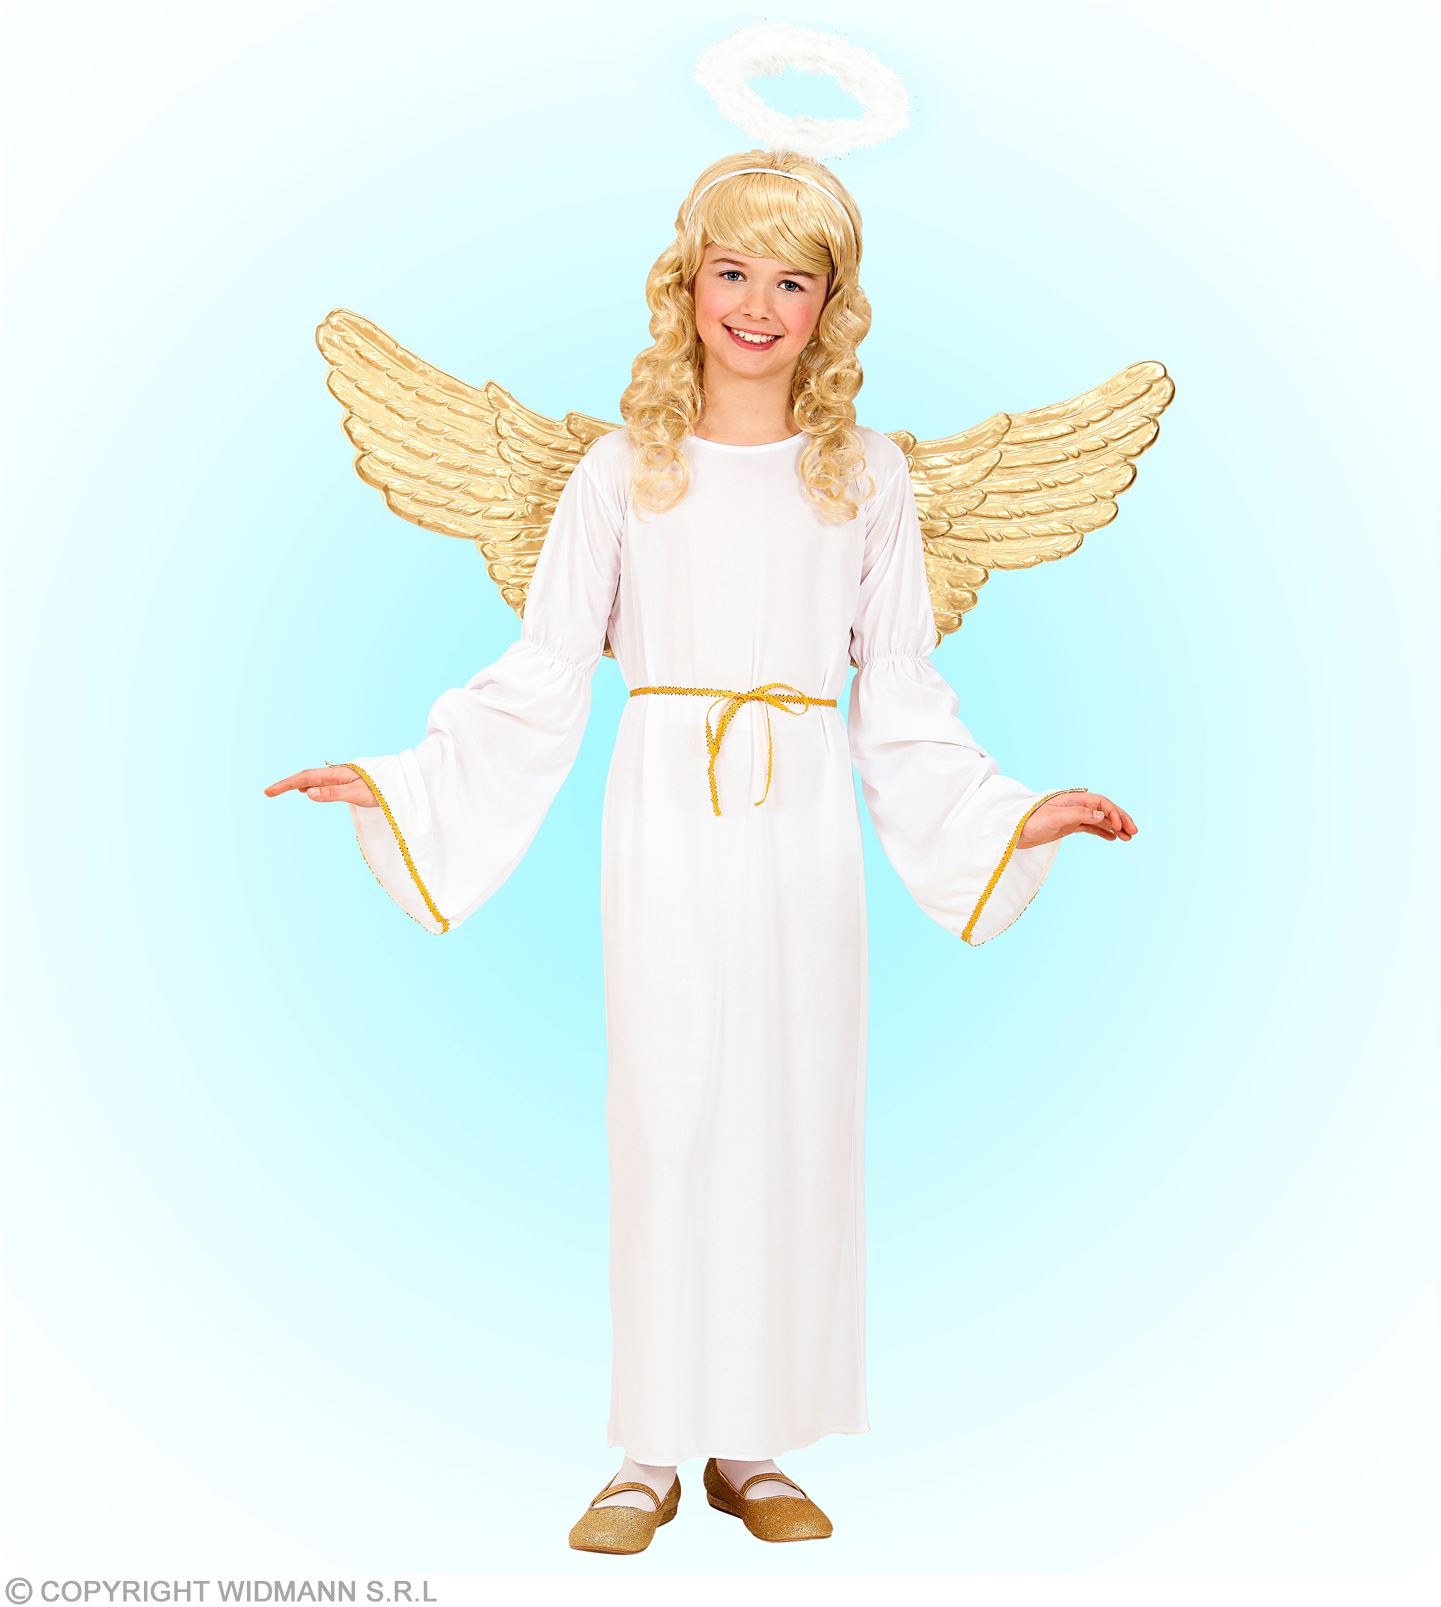 Engel Faschingsköstüm Kinderkostüm Mädchen 1-2 Jahre Größe 98 cm 